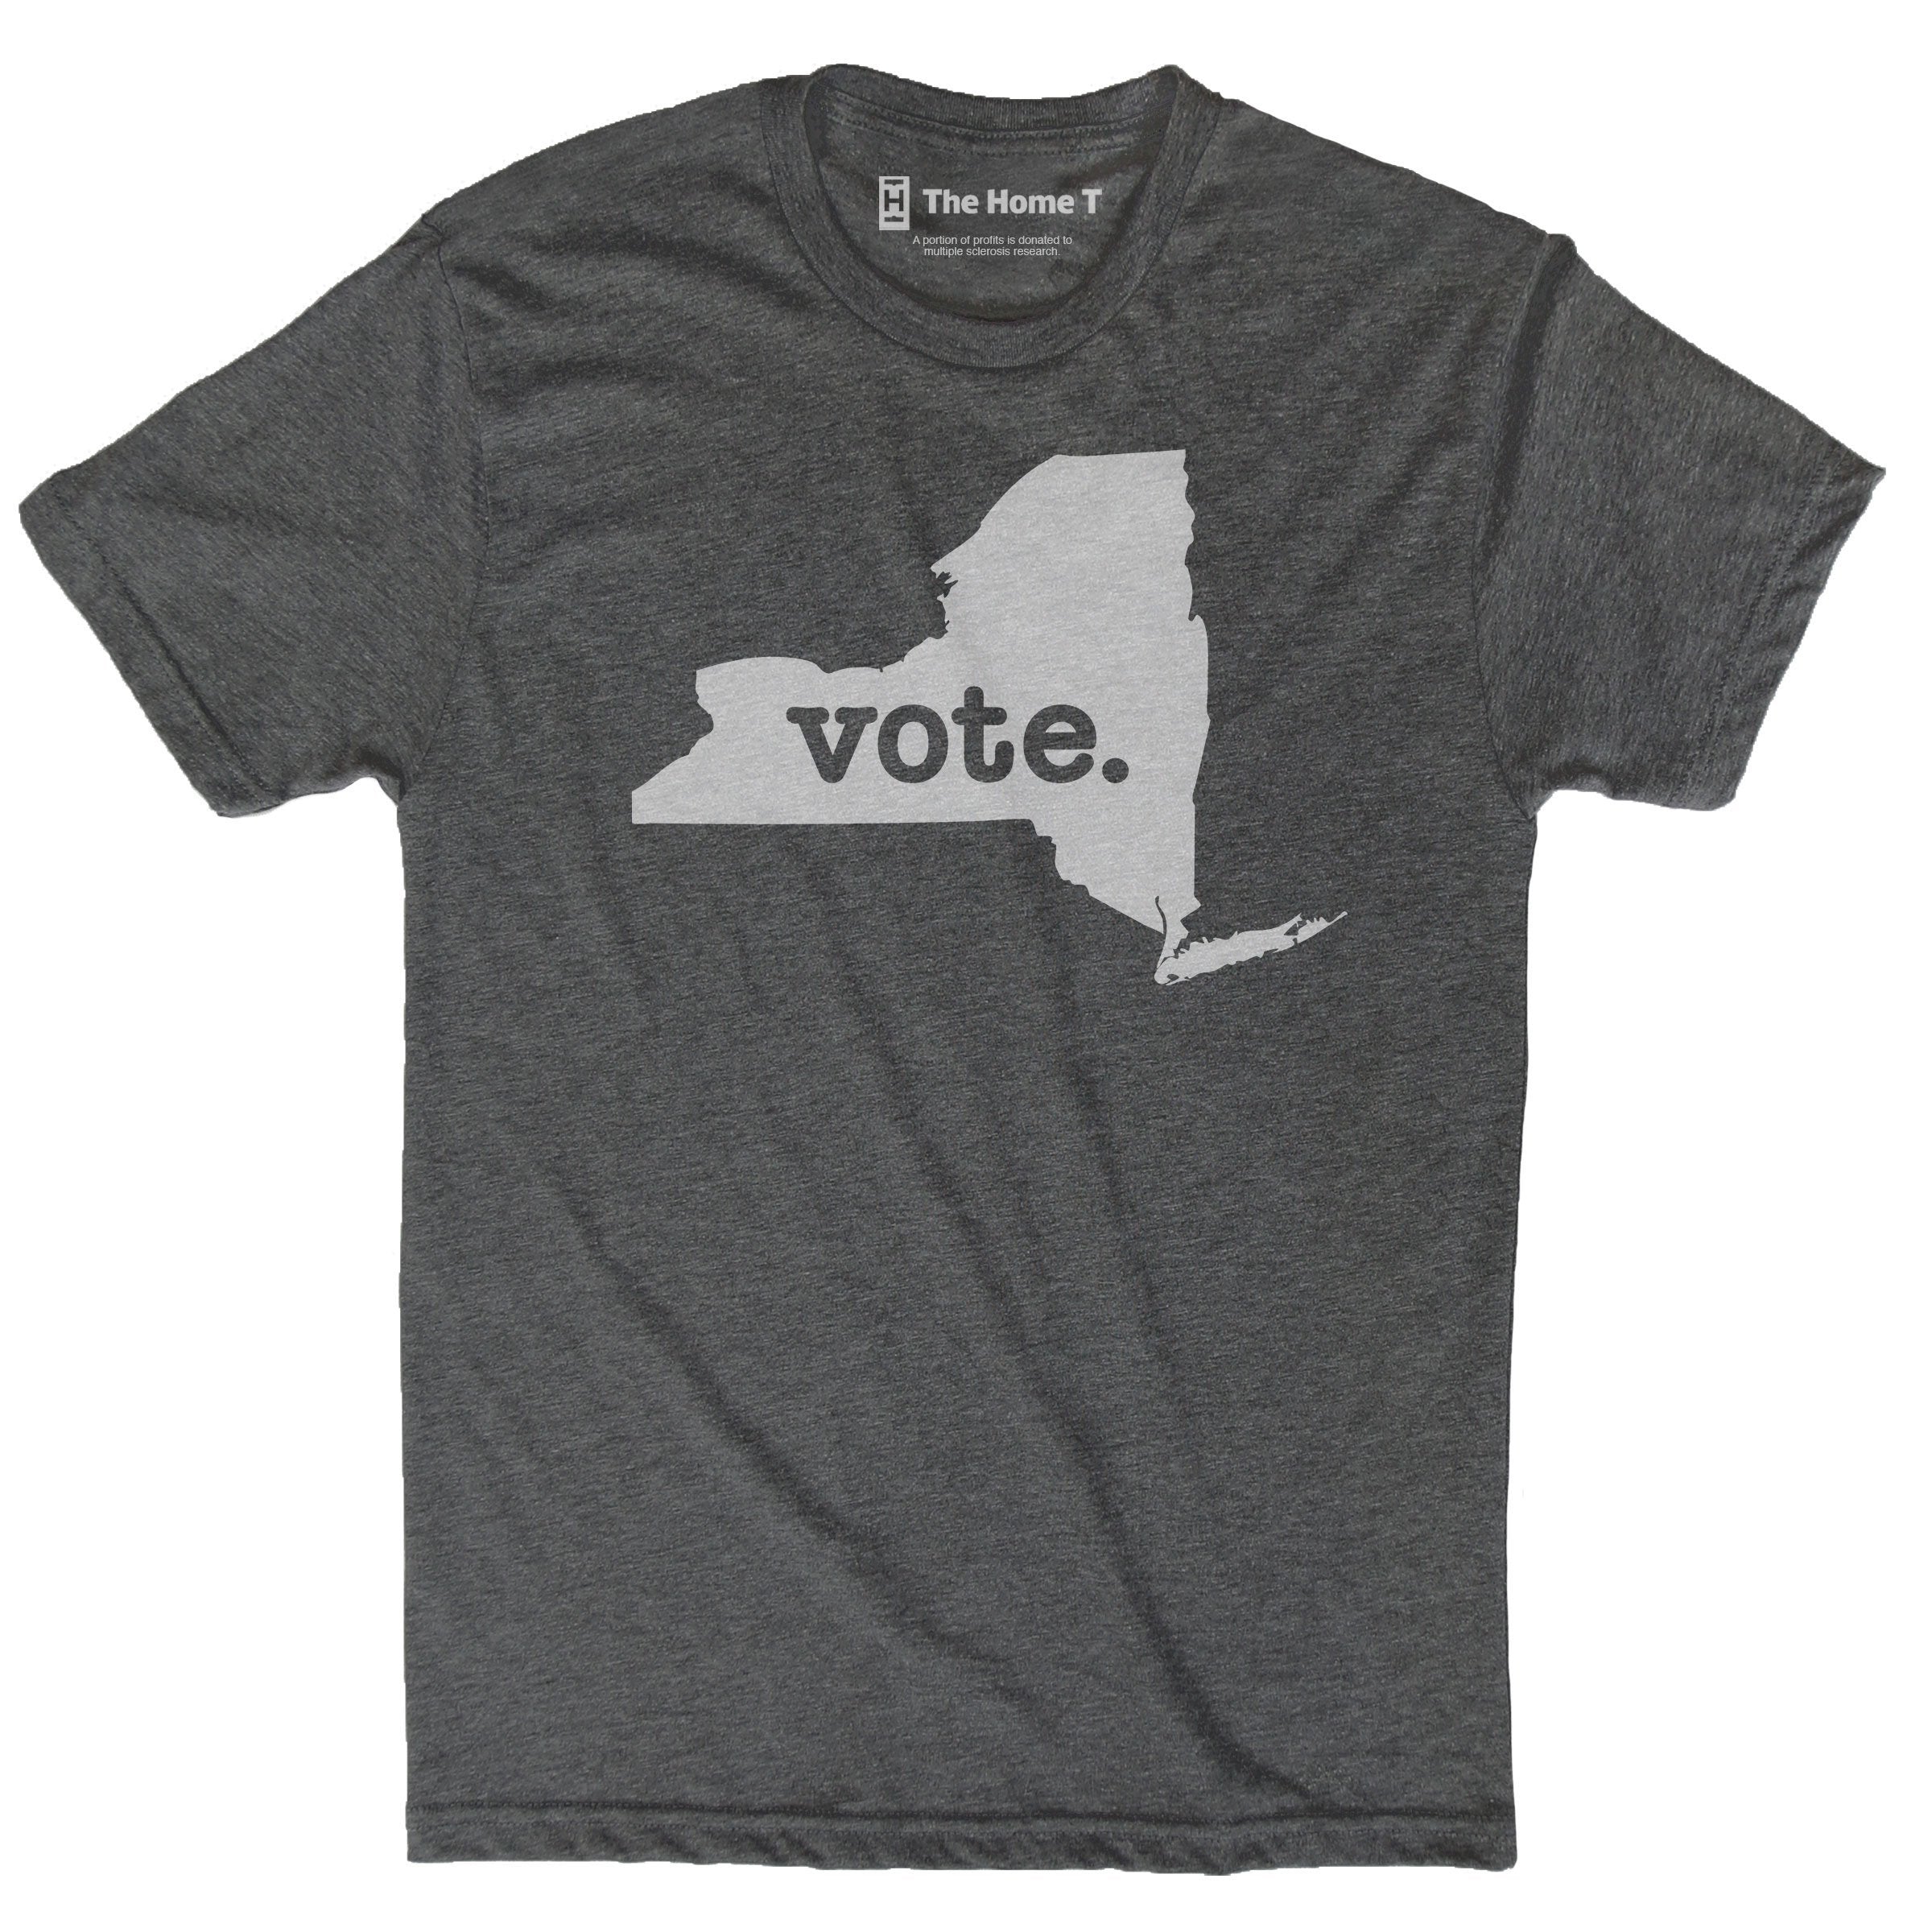 New York Vote Home T Vote The Home T XS Grey